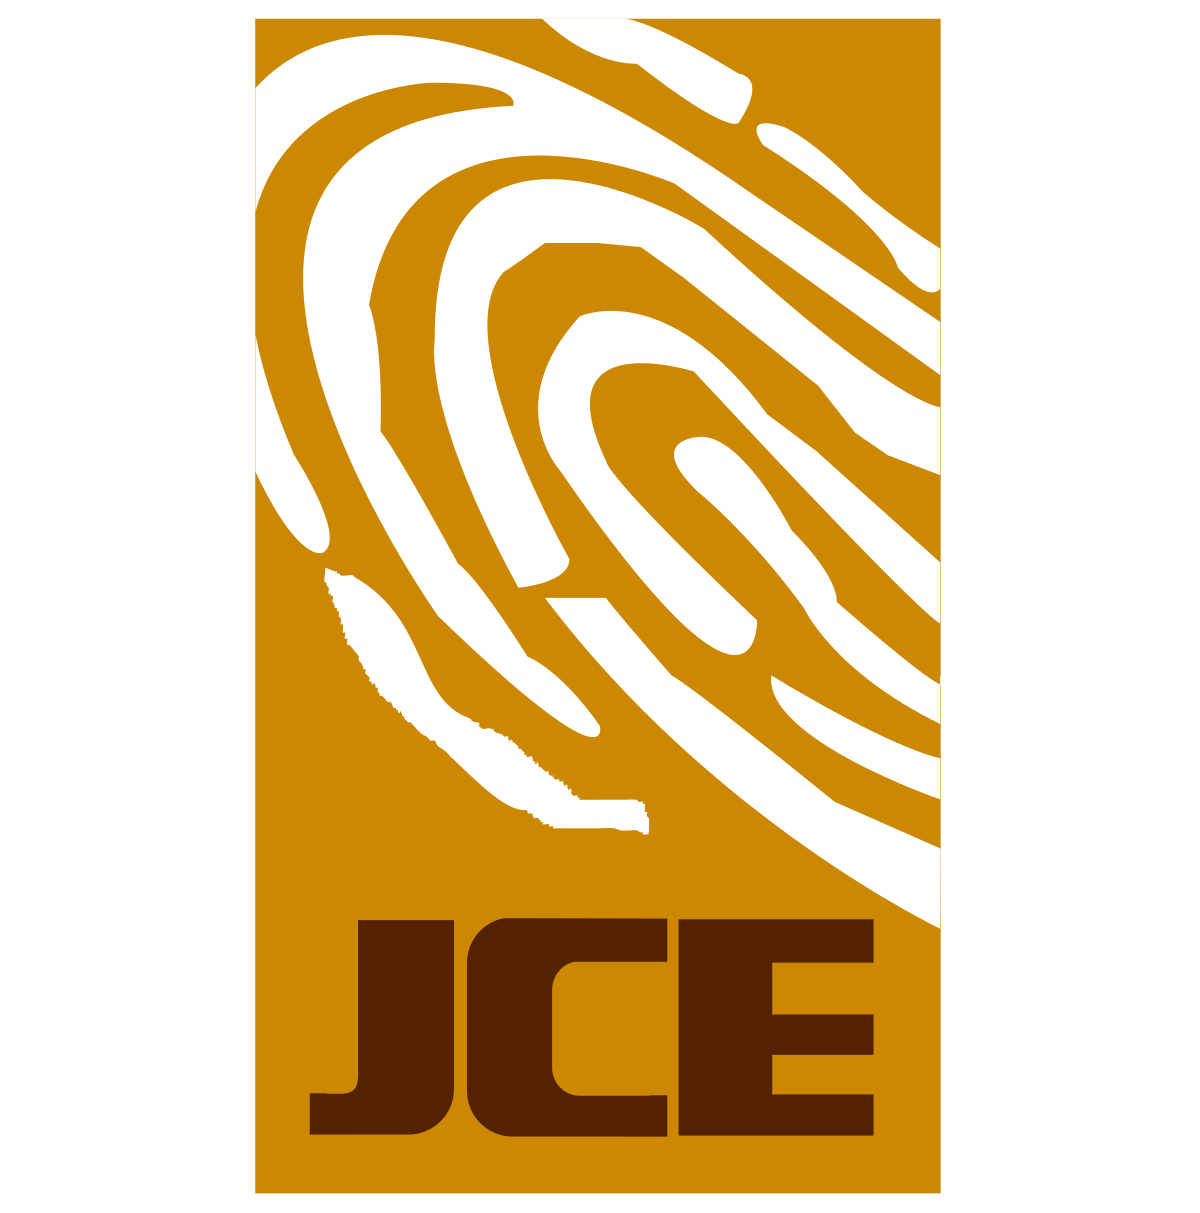 Junta Central Electoral (JCE)